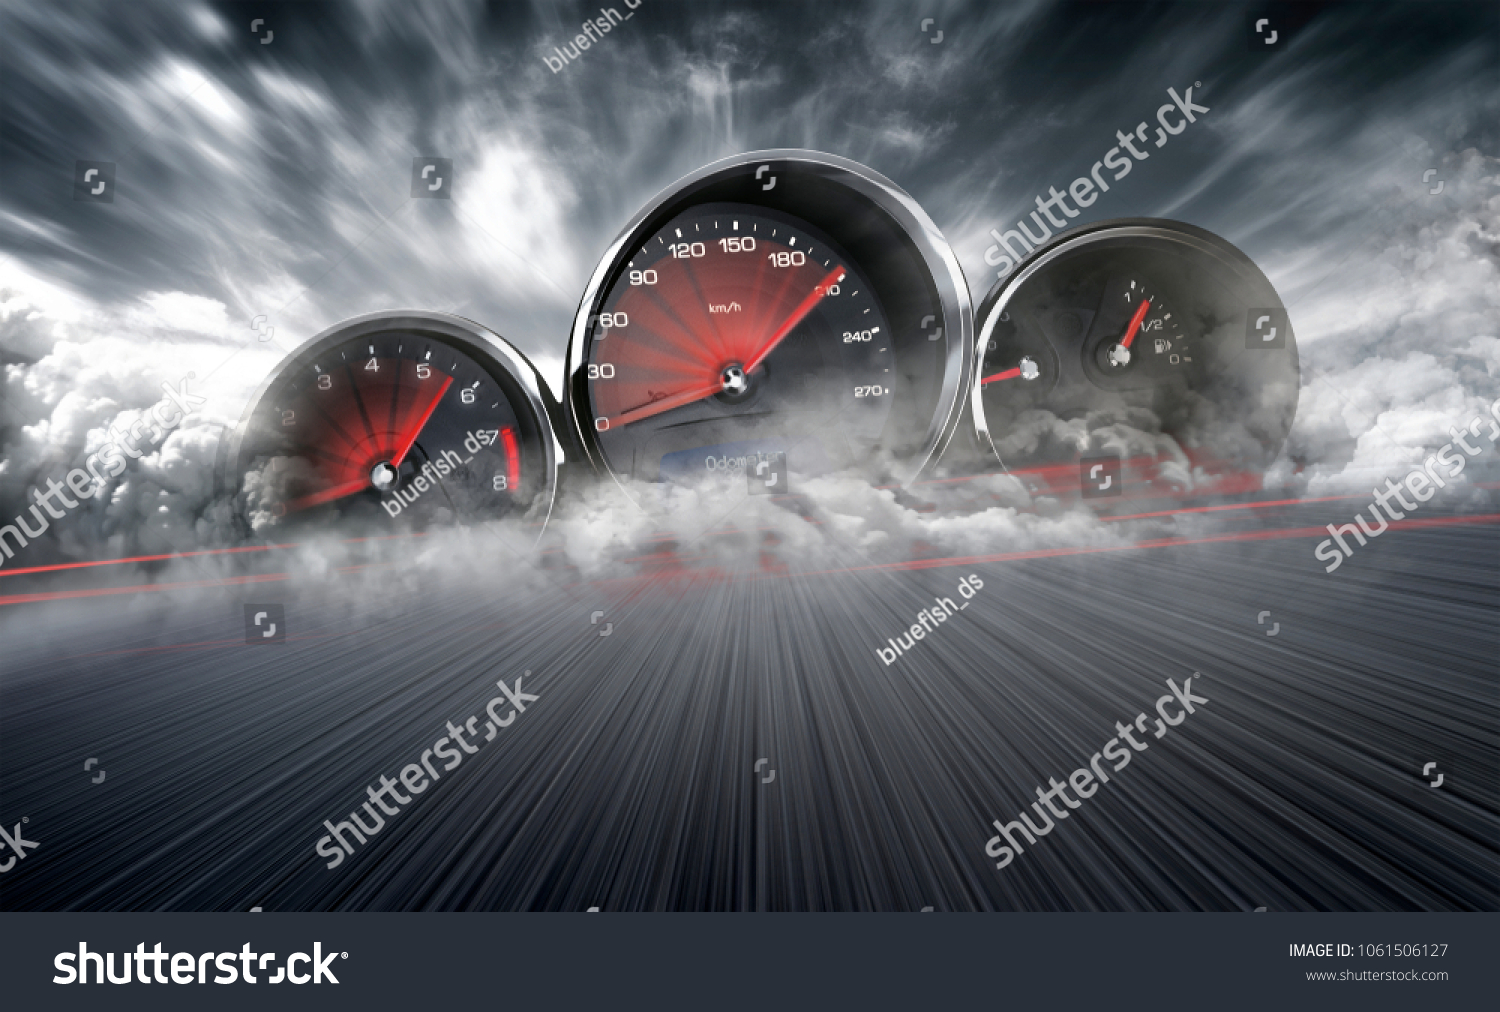 Speedometer scoring high speed in a fast motion blur racetrack background. Speeding Car Background Photo Concept. #1061506127